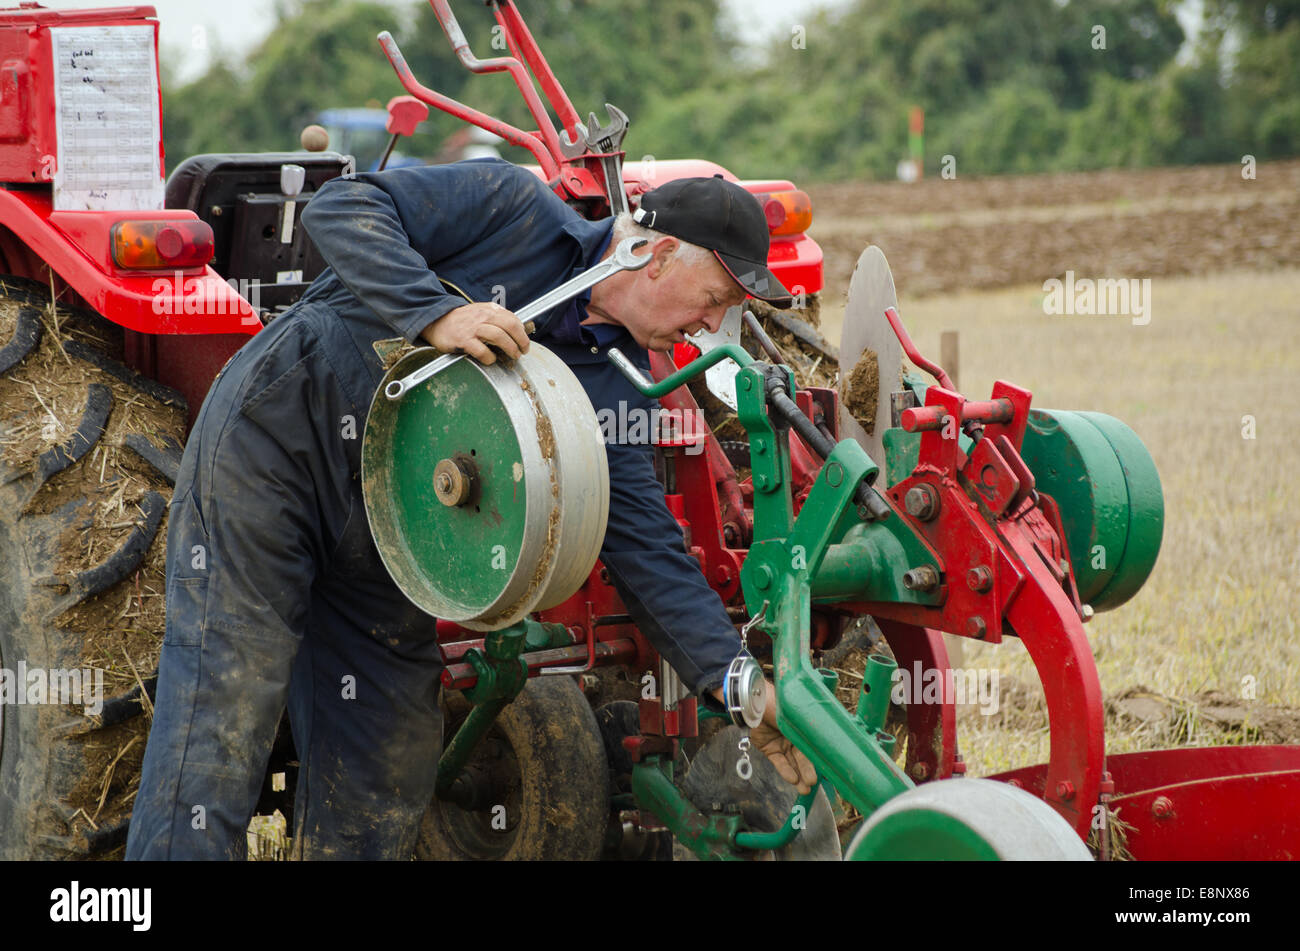 David Chappell making adjustments at British National Ploughing Championships 2014 Stock Photo